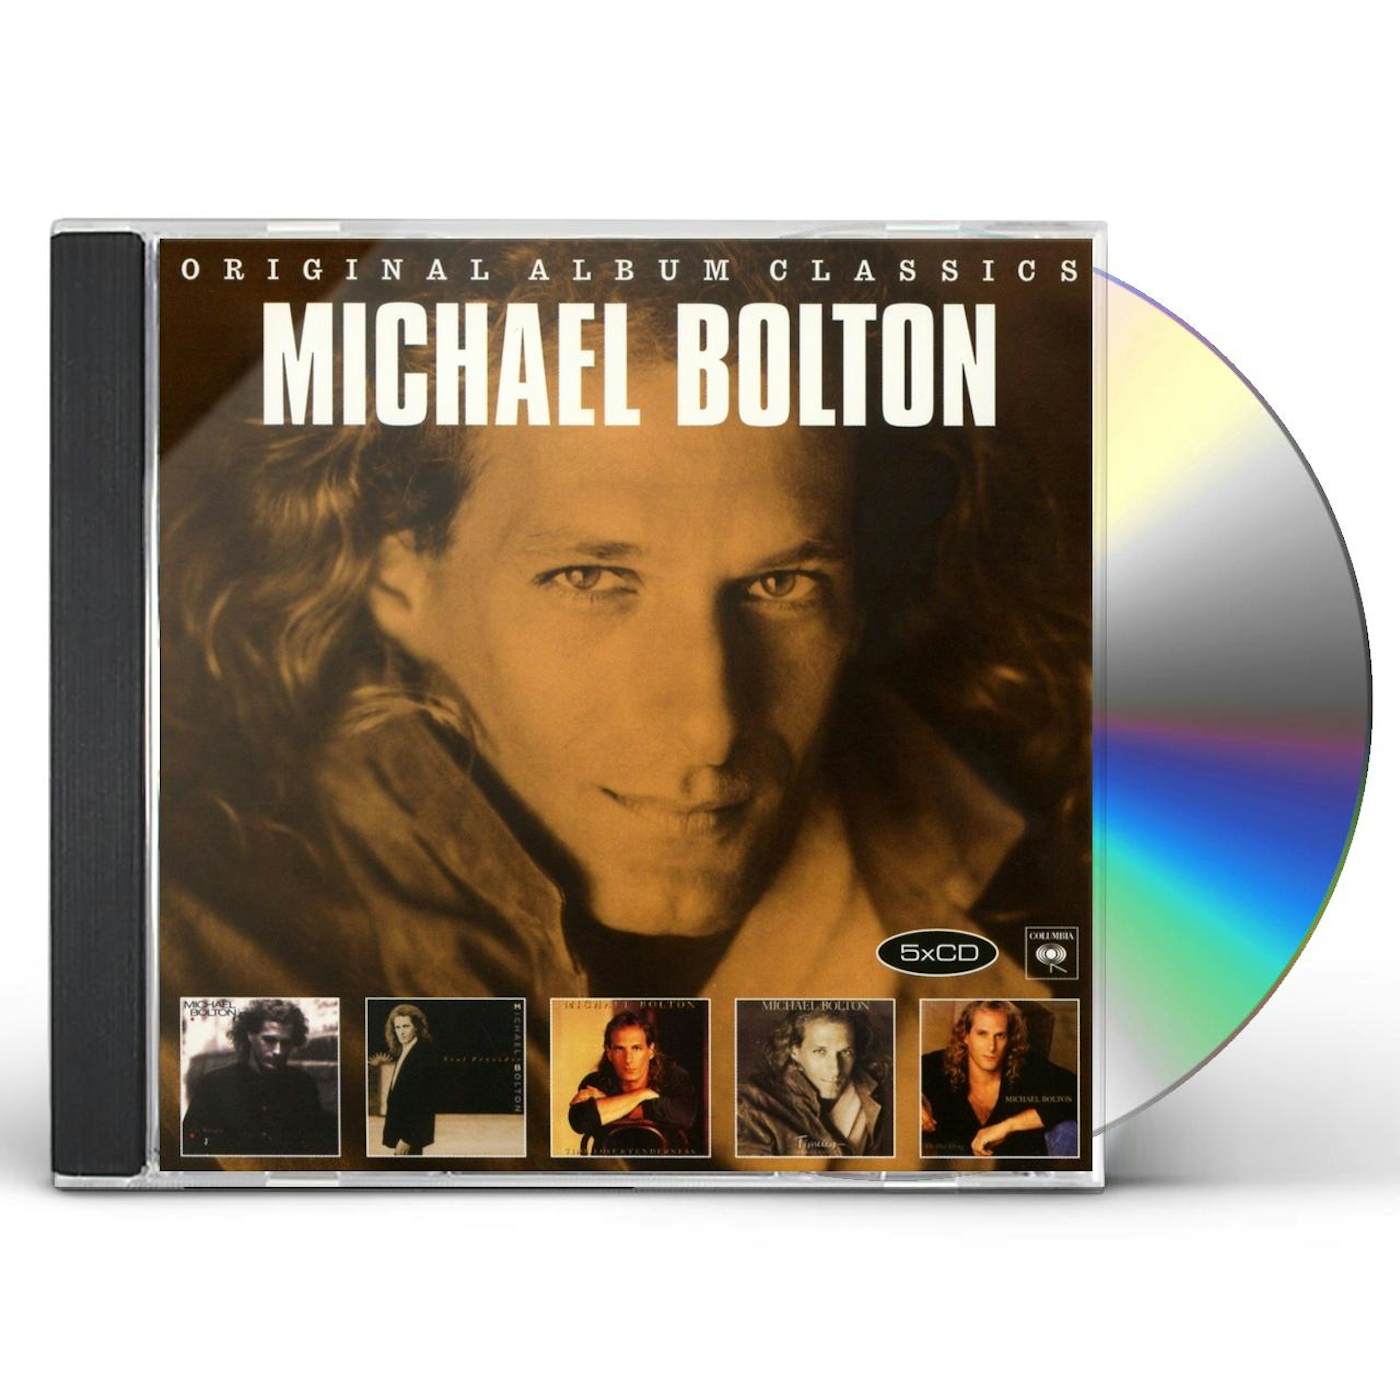 Michael Bolton ORIGINAL ALBUM CLASSICS CD